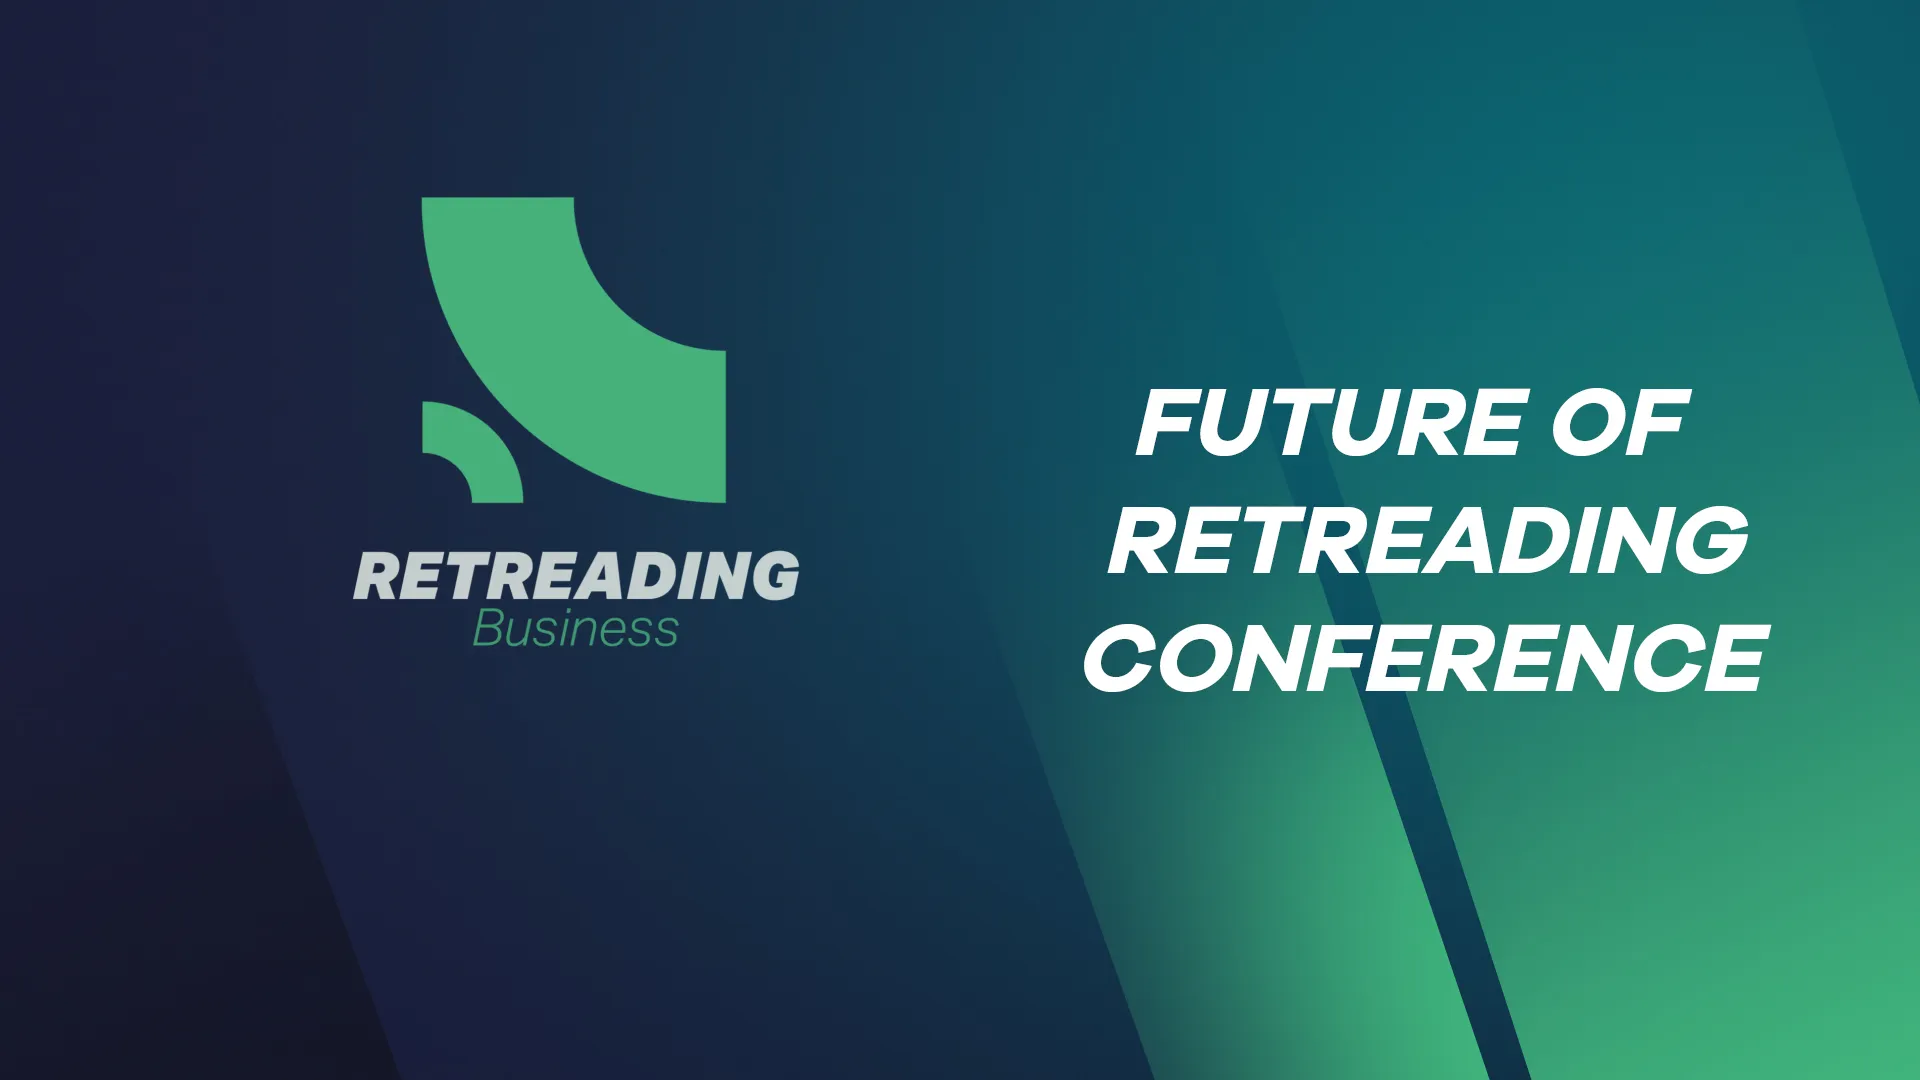 Future of Retreading Conference